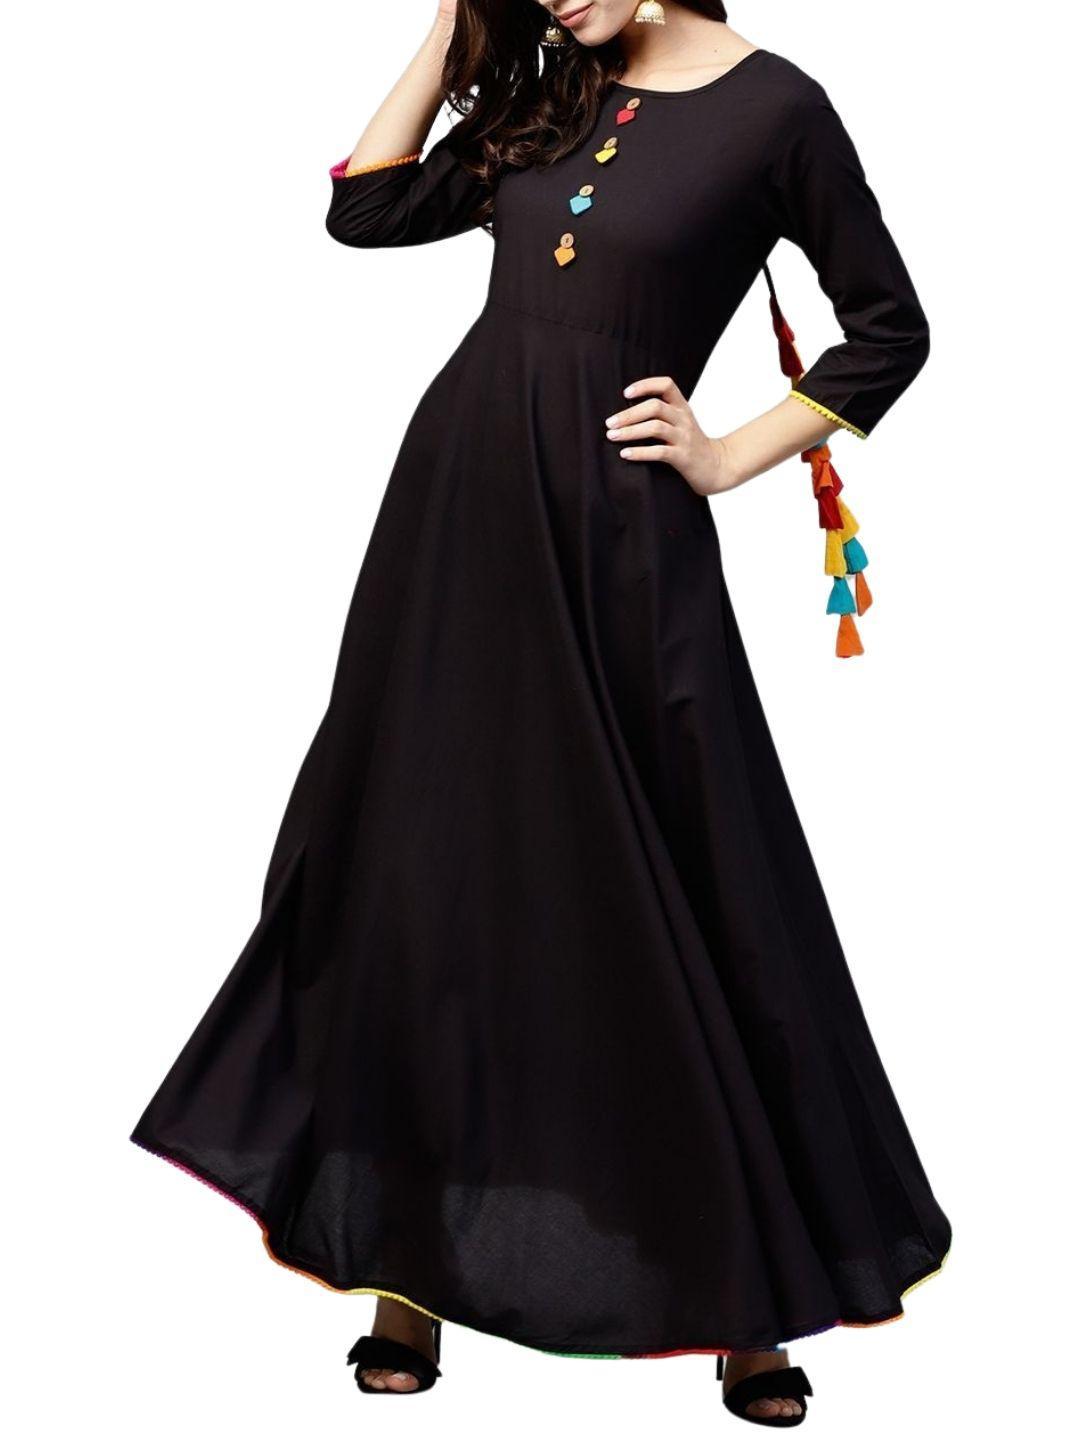 black-maxi-dress-10204012BK, Women Indian Ethnic Clothing, Cotton Dress